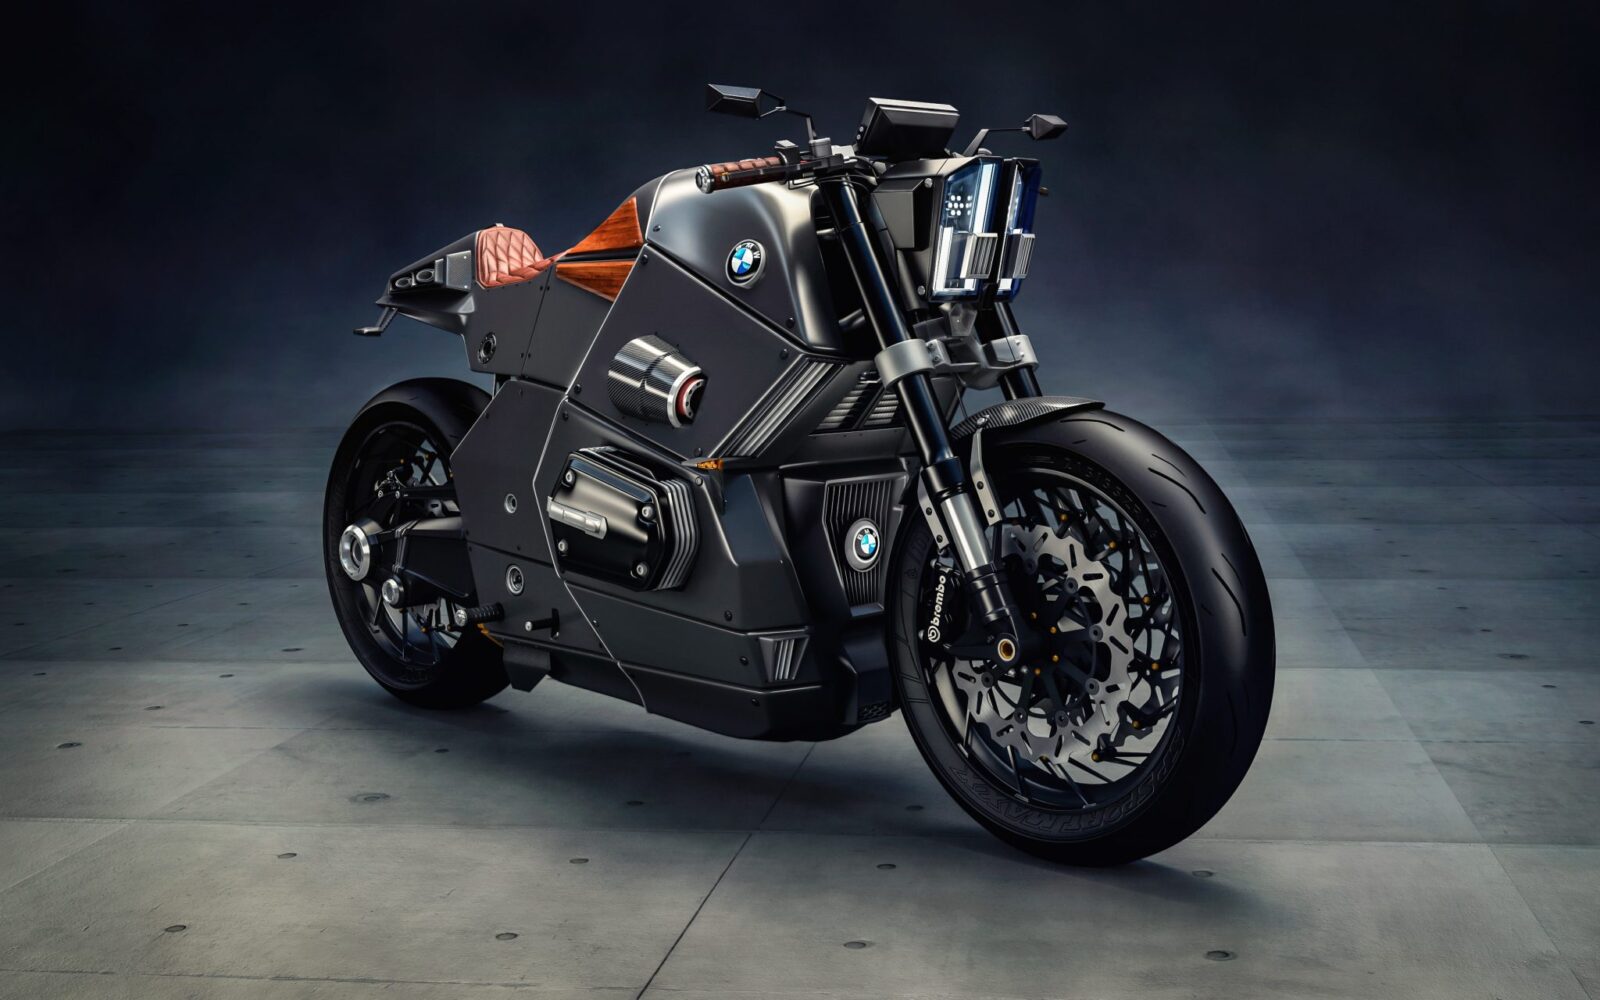 BMW Motorcycle 1 1600x1000 - BMW Urban Racer